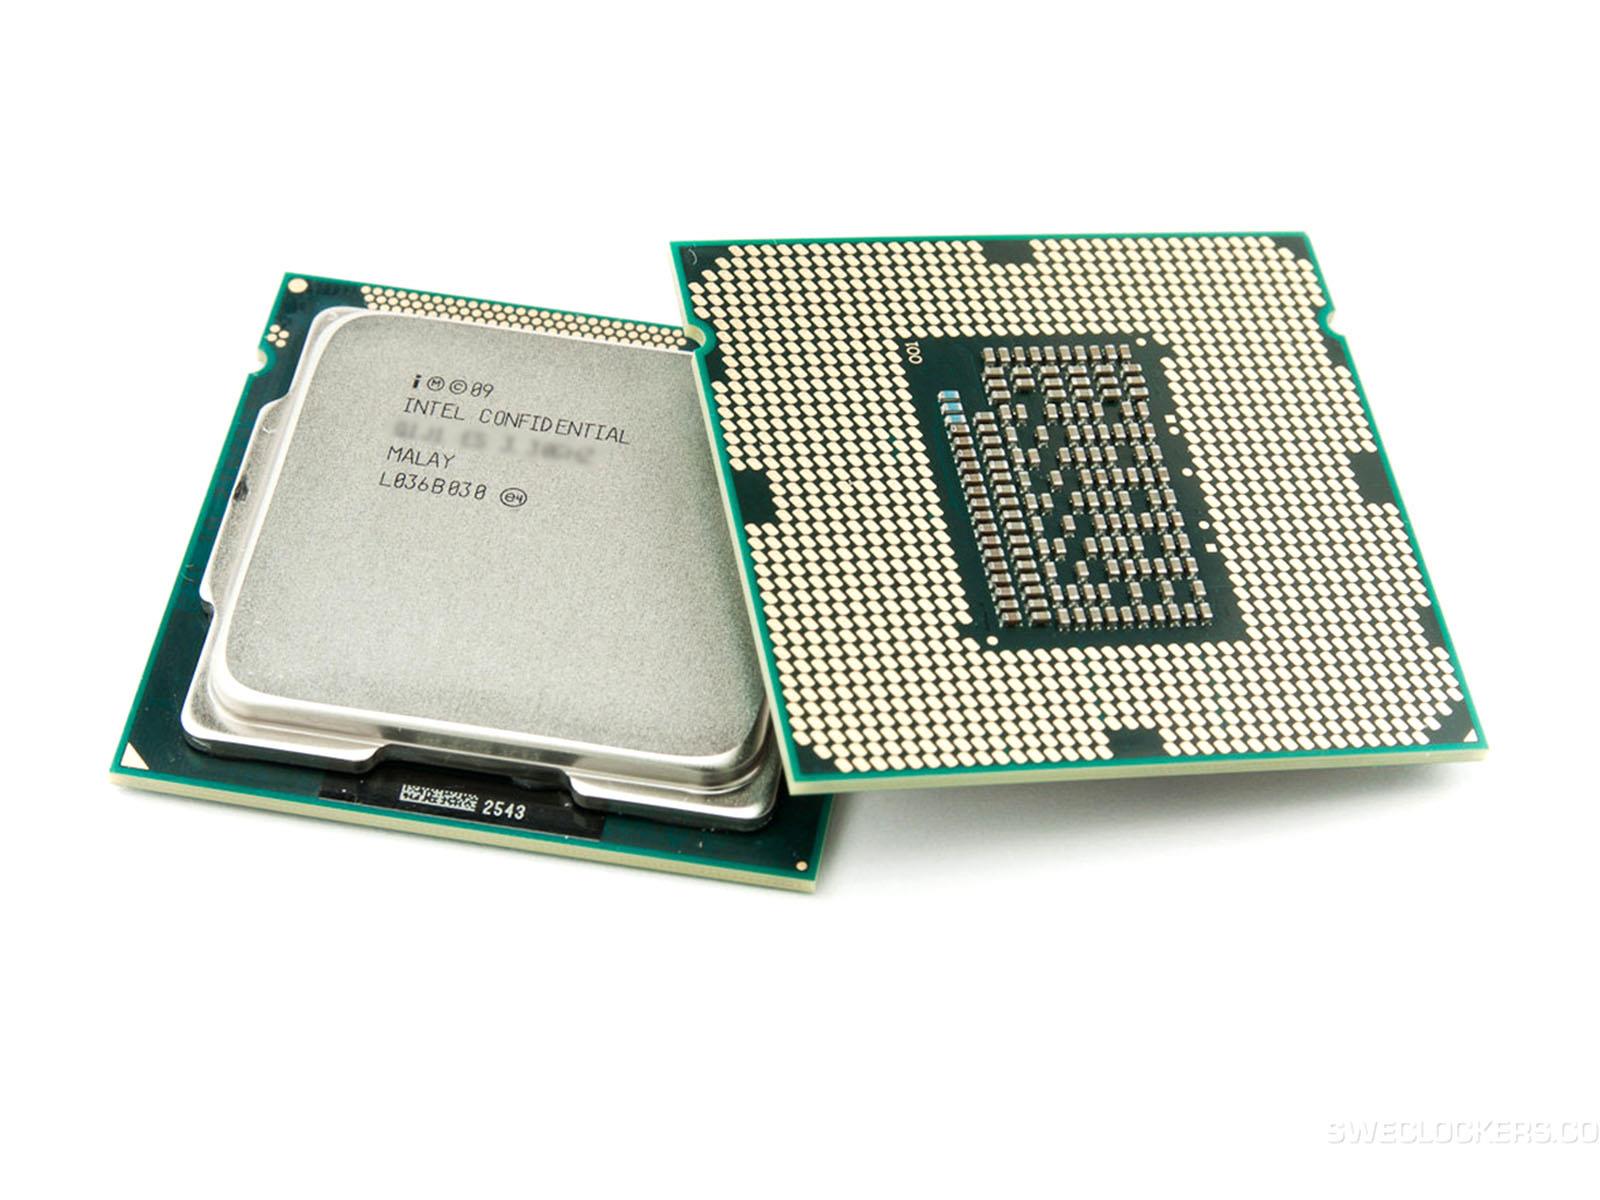 Intel G530 cpu